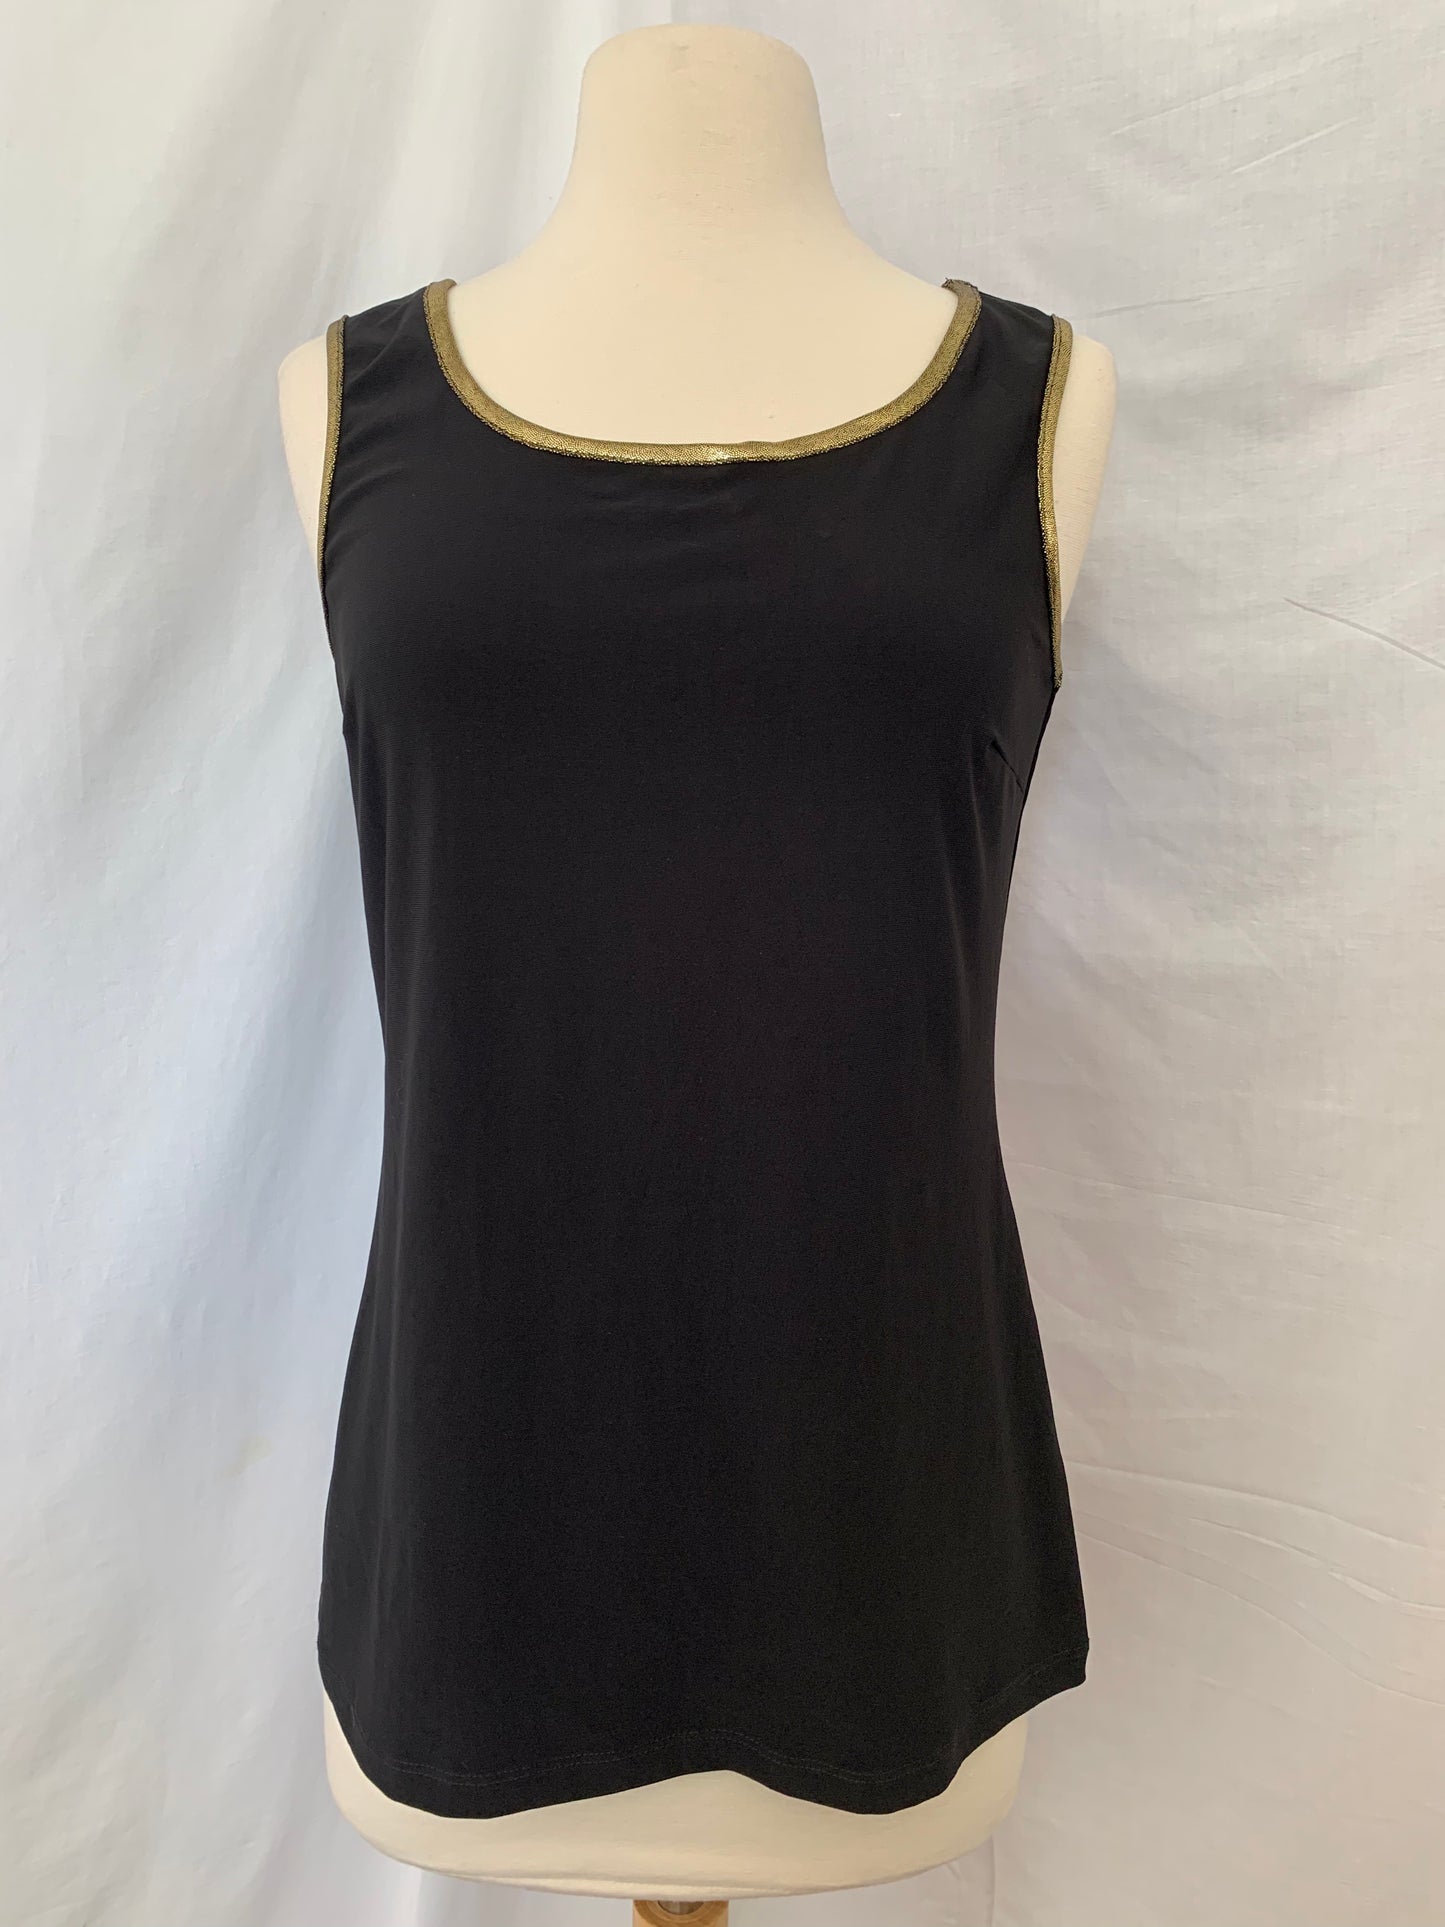 NWT - FRANK LYMAN DESIGN black with gold trim Sleeveless Shirt - 8